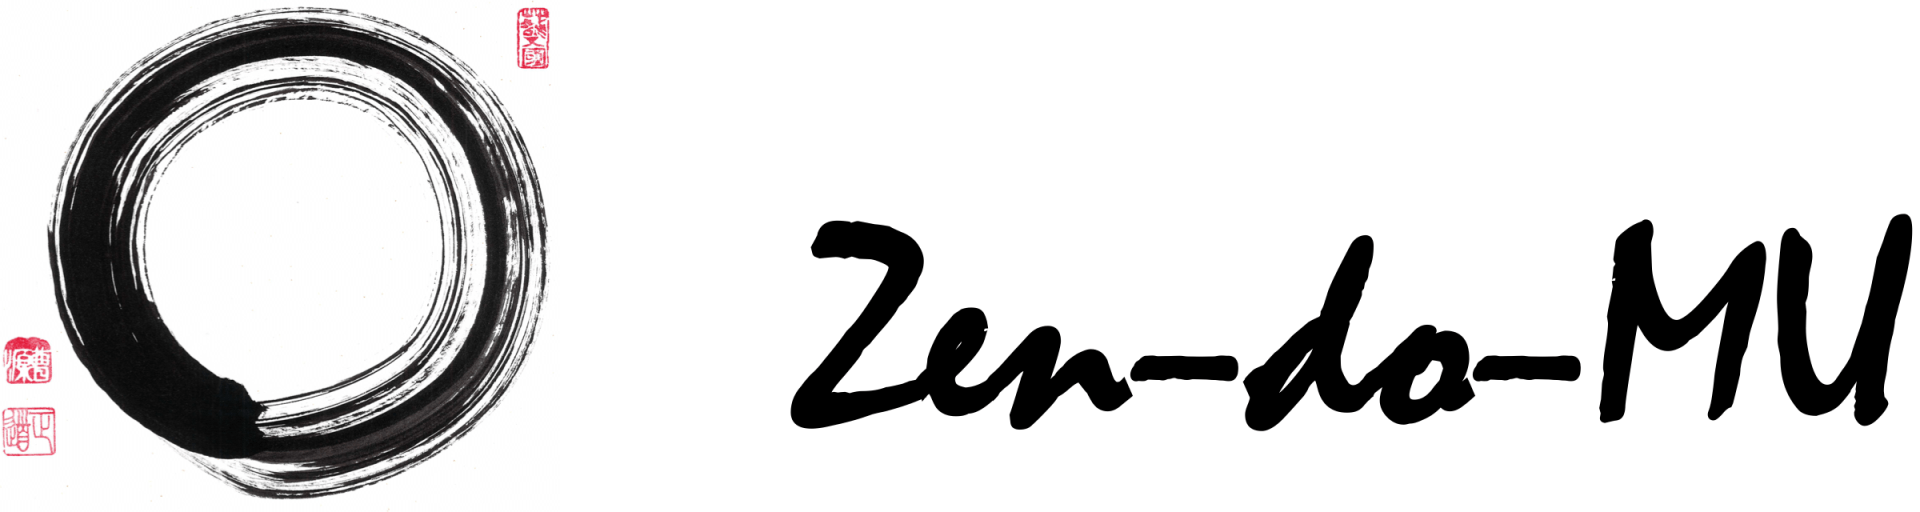 Zen-do-MU